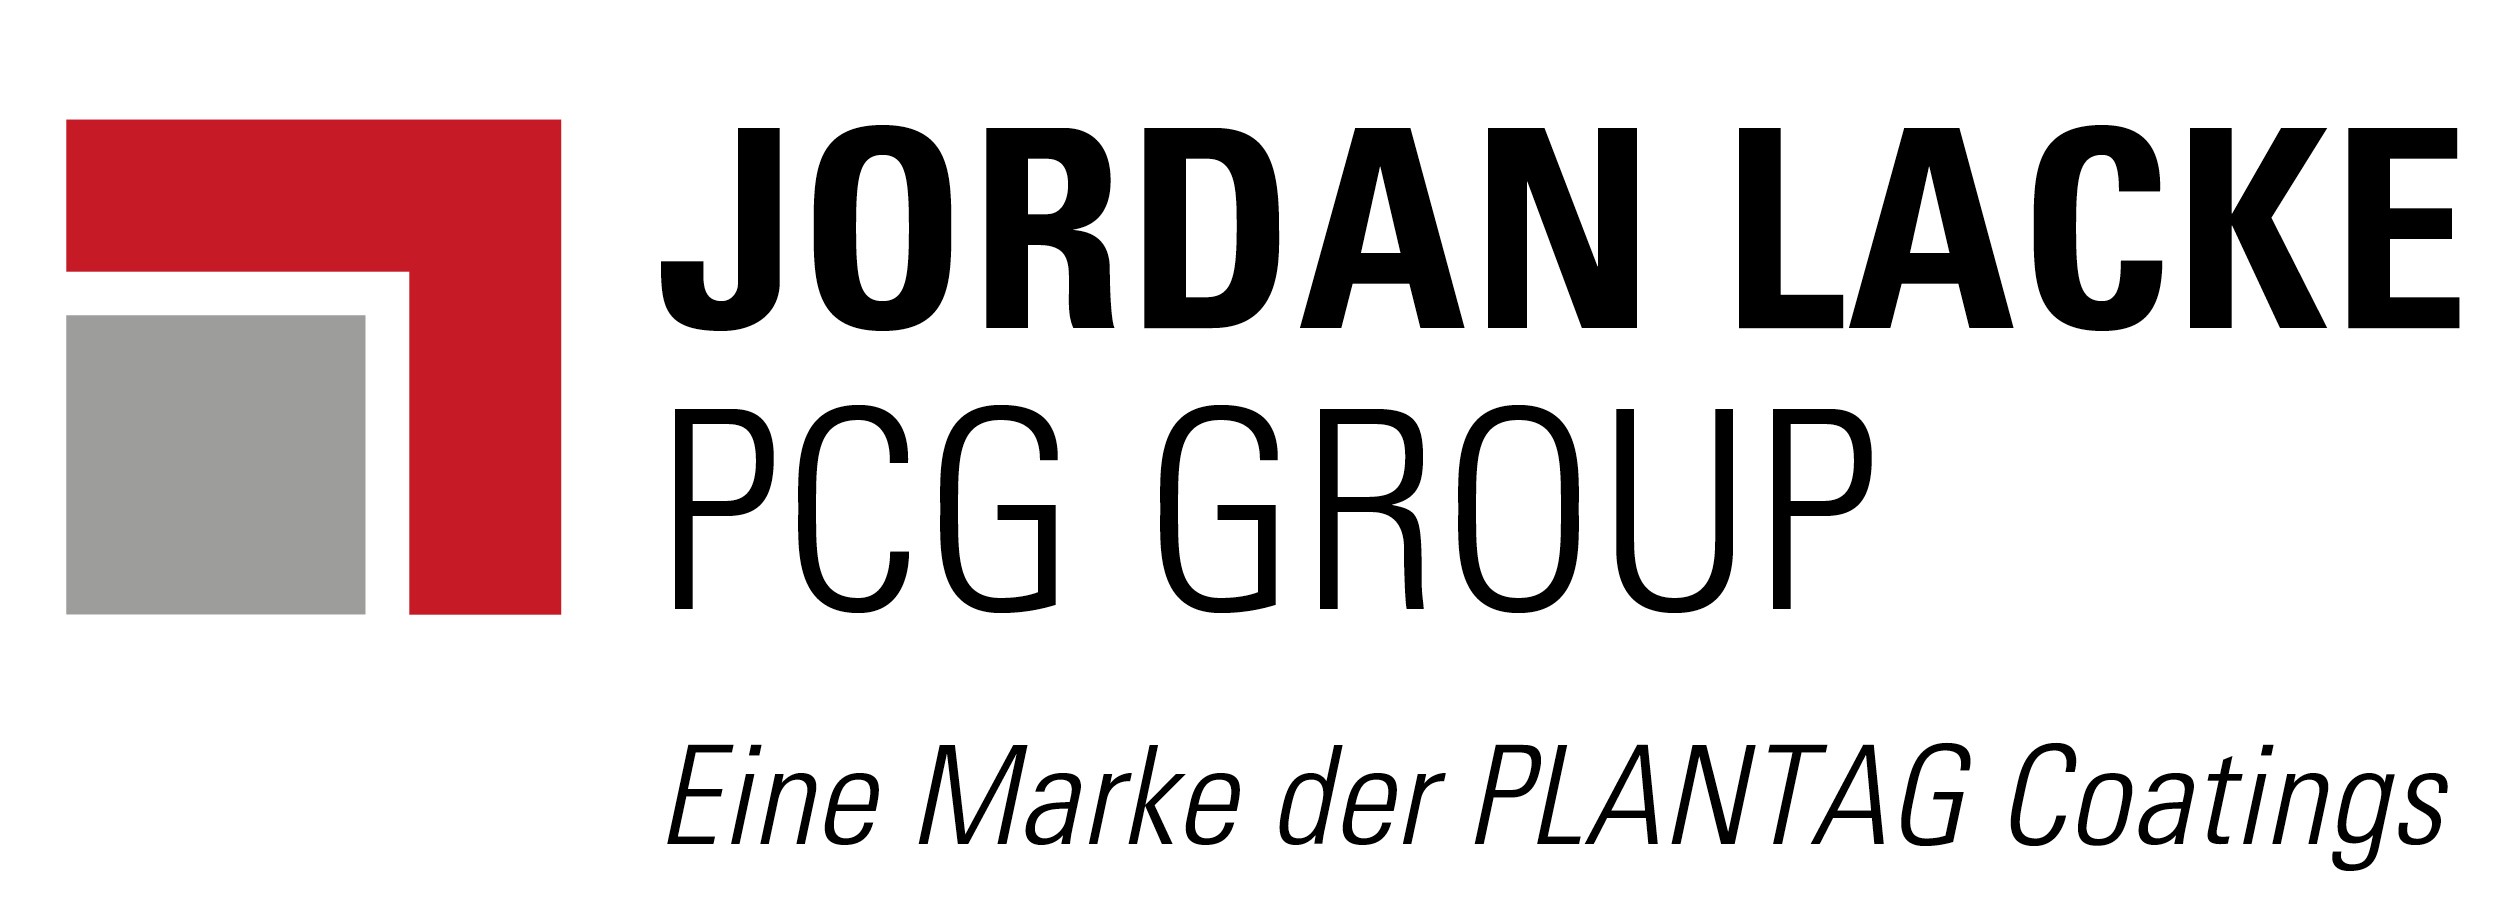 Jordan Lacke wird Marke der PLANTAG Coatings